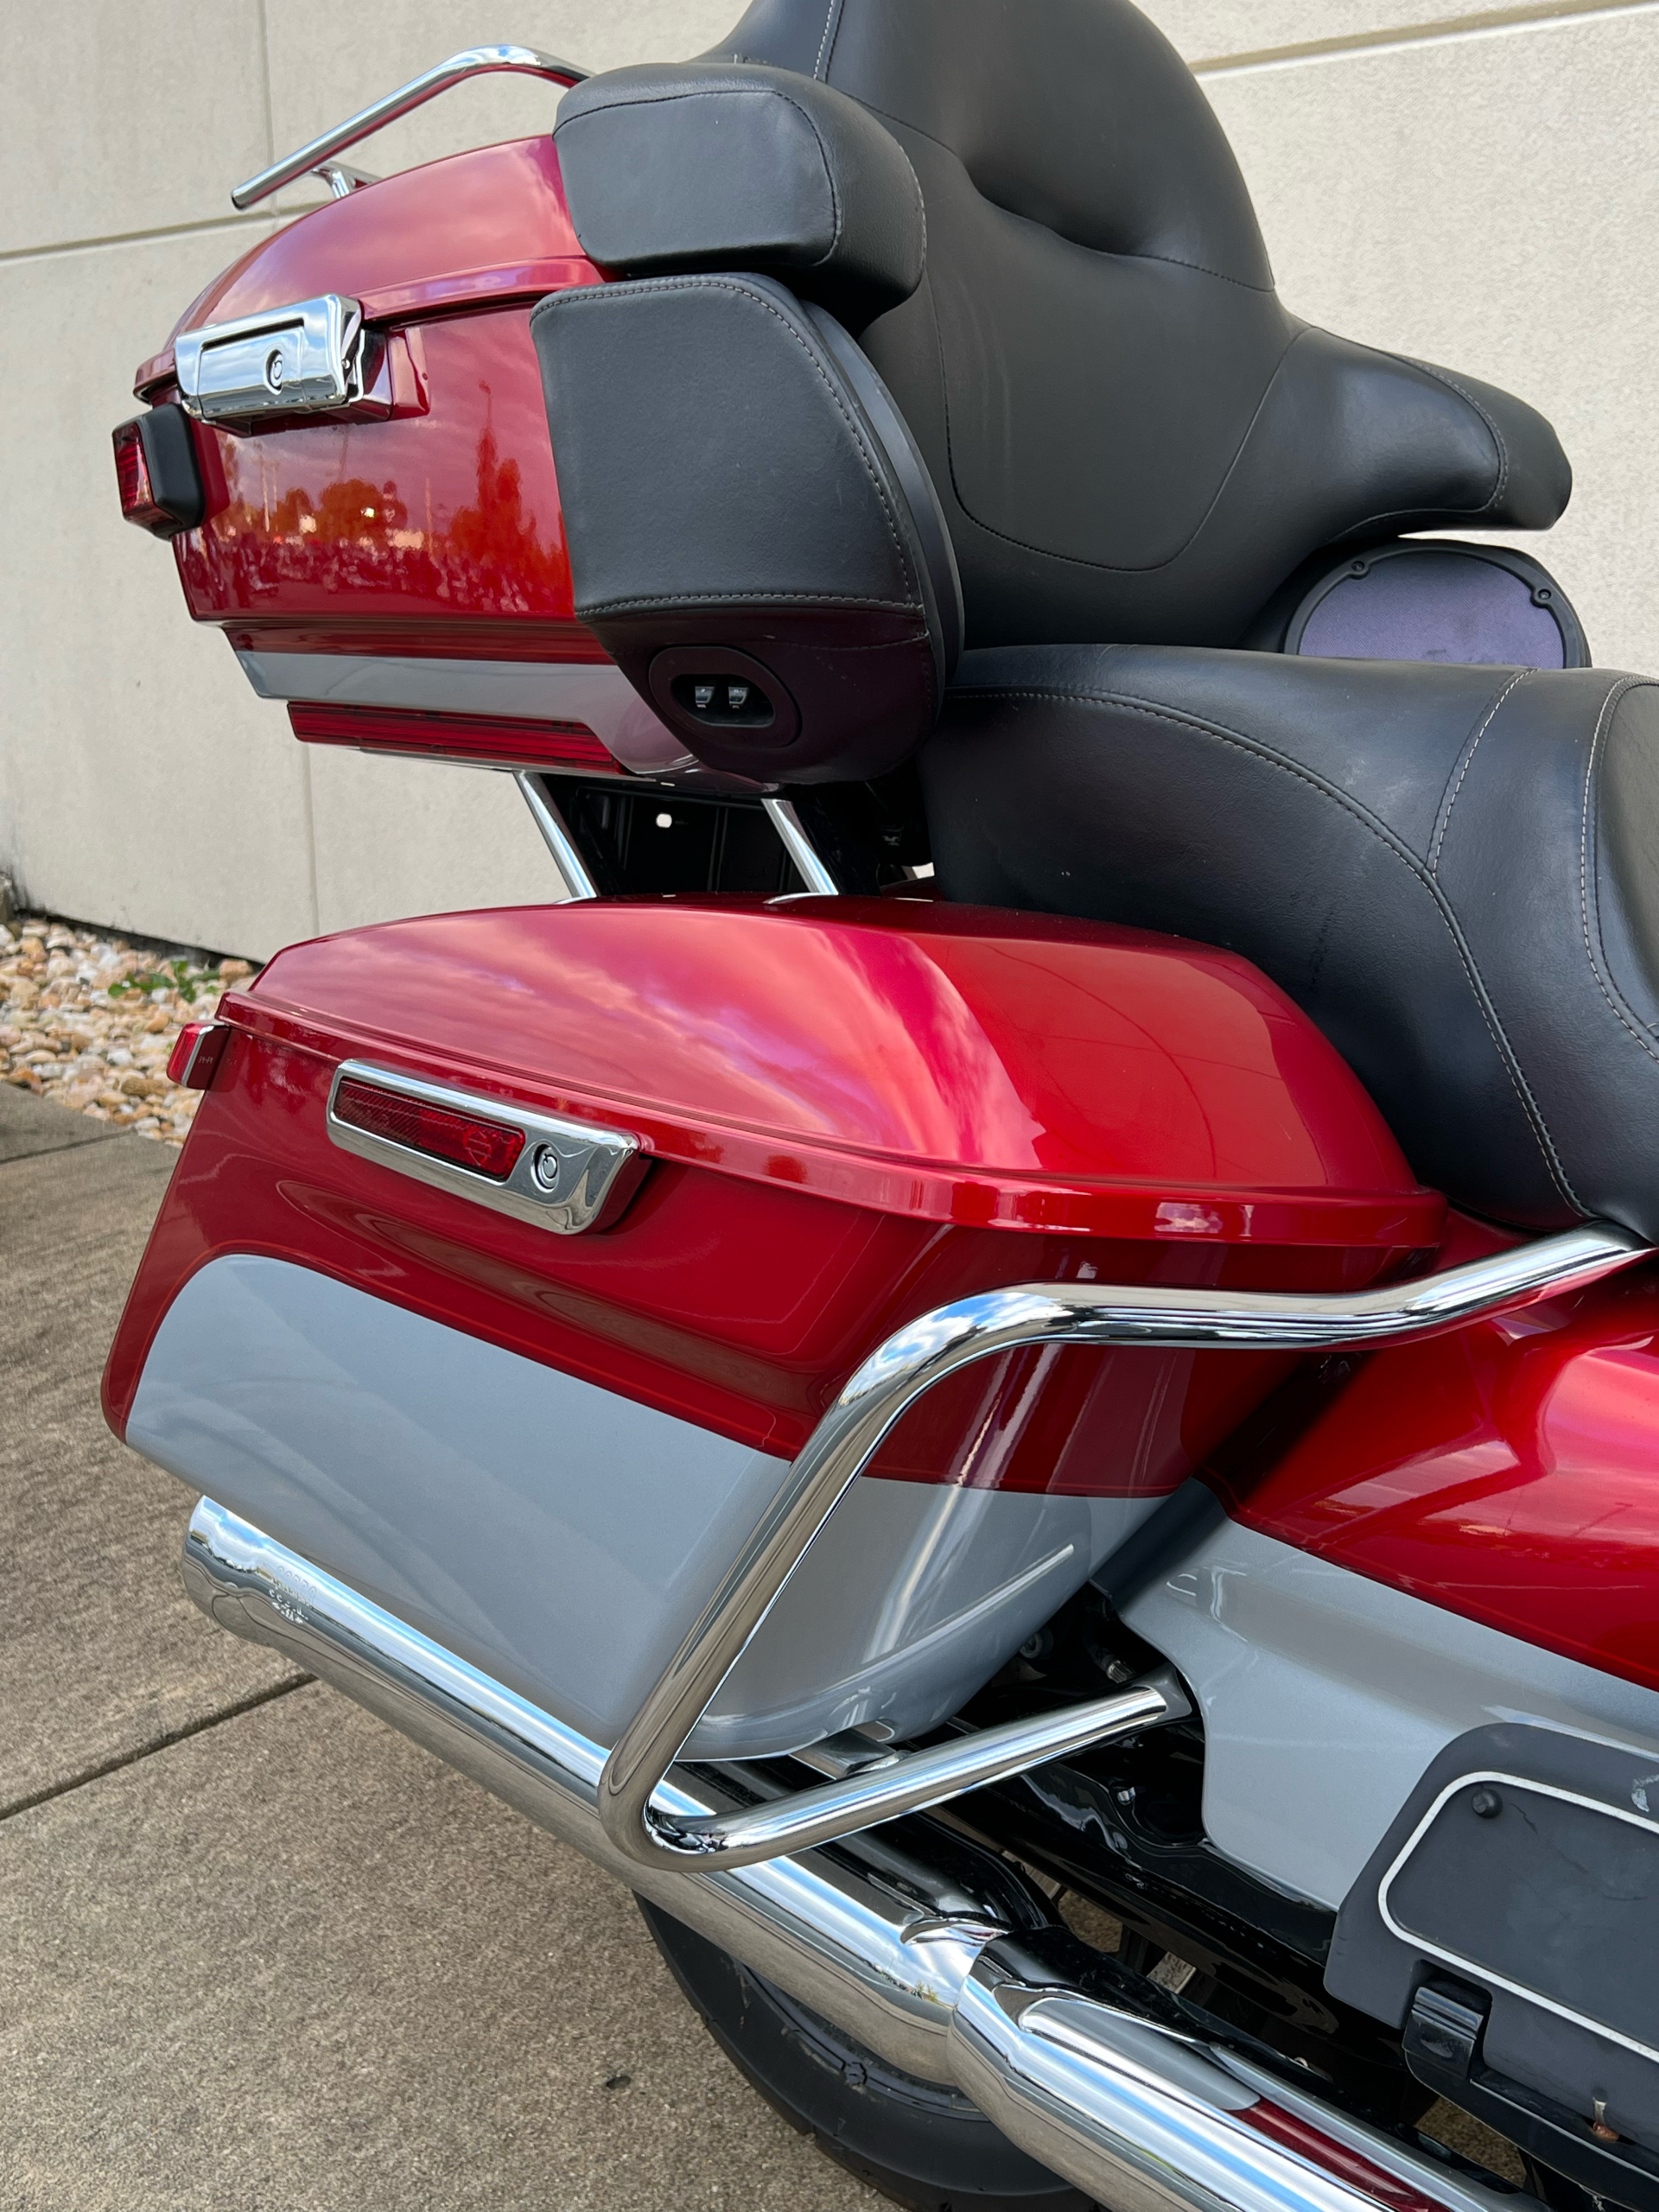 2019 Harley-Davidson Road Glide Ultra in Dumfries, Virginia - Photo 8